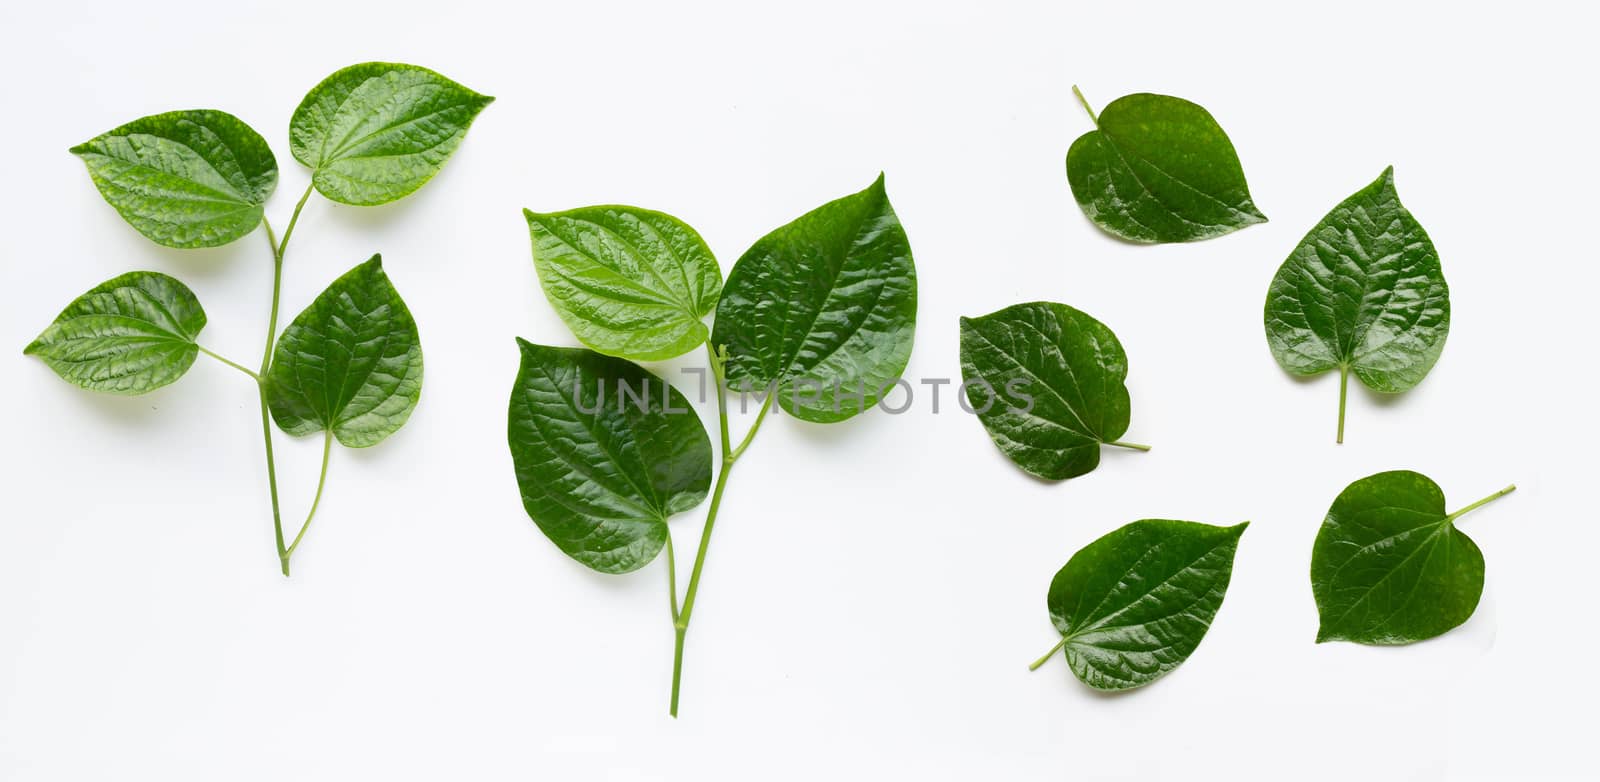 Piper sarmentosum or Wildbetal leafbush on white background by Bowonpat